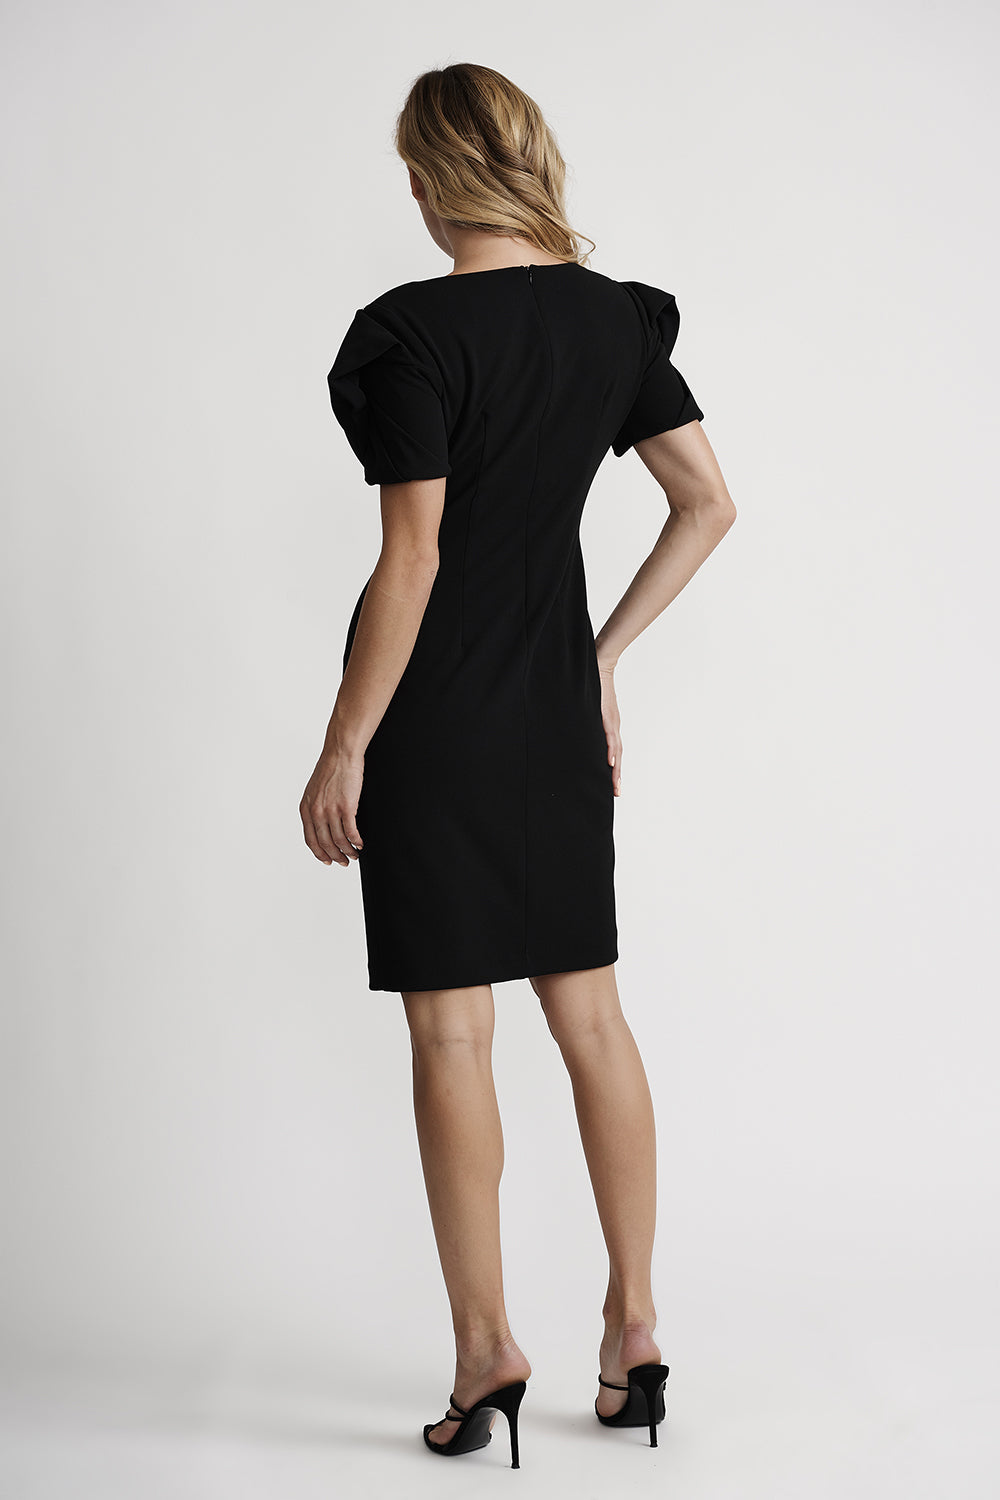 Joseph Ribkoff Black Dress Style 201228